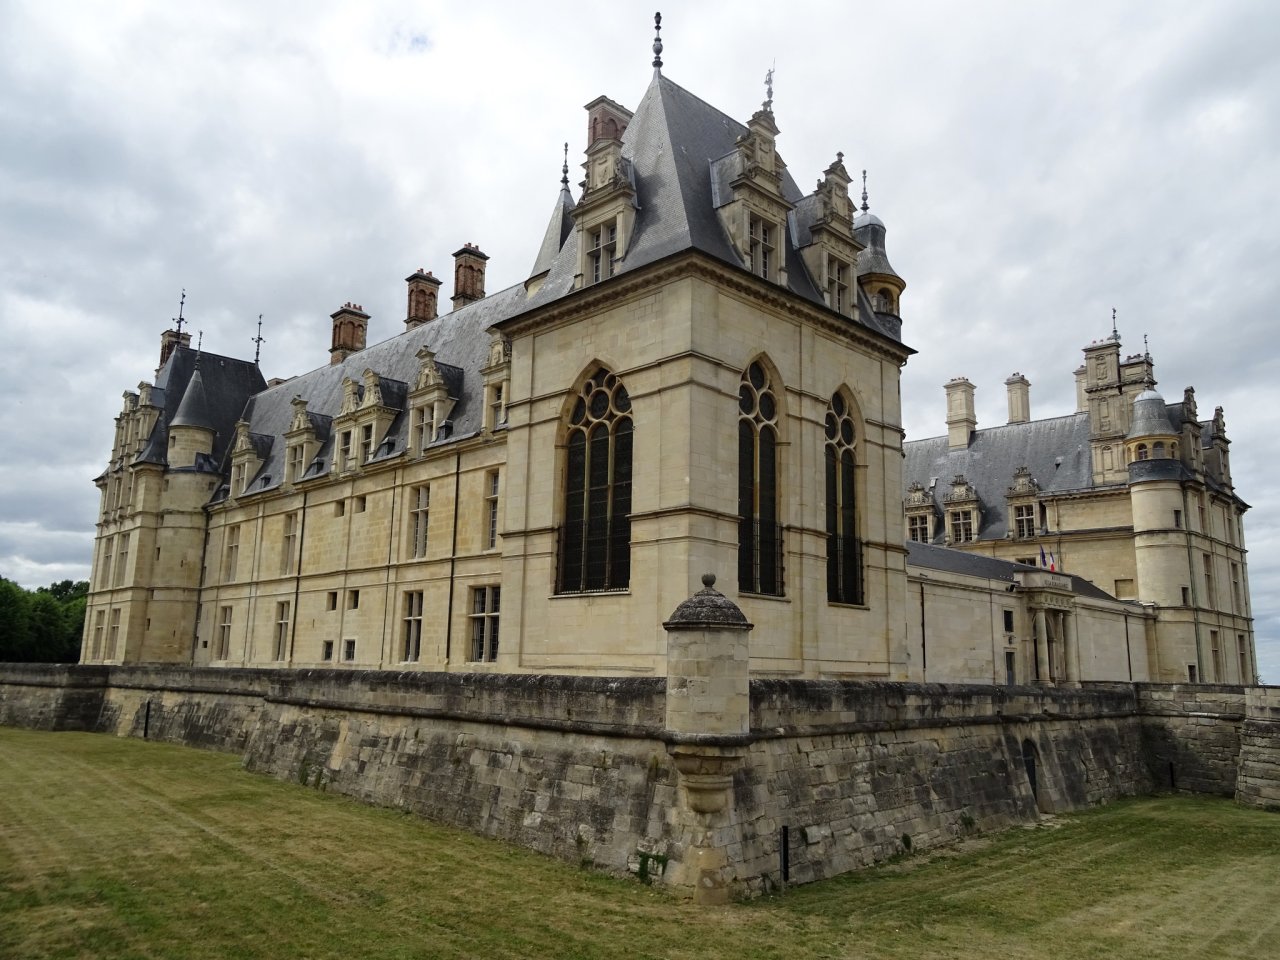 Ecouen, Castles in France